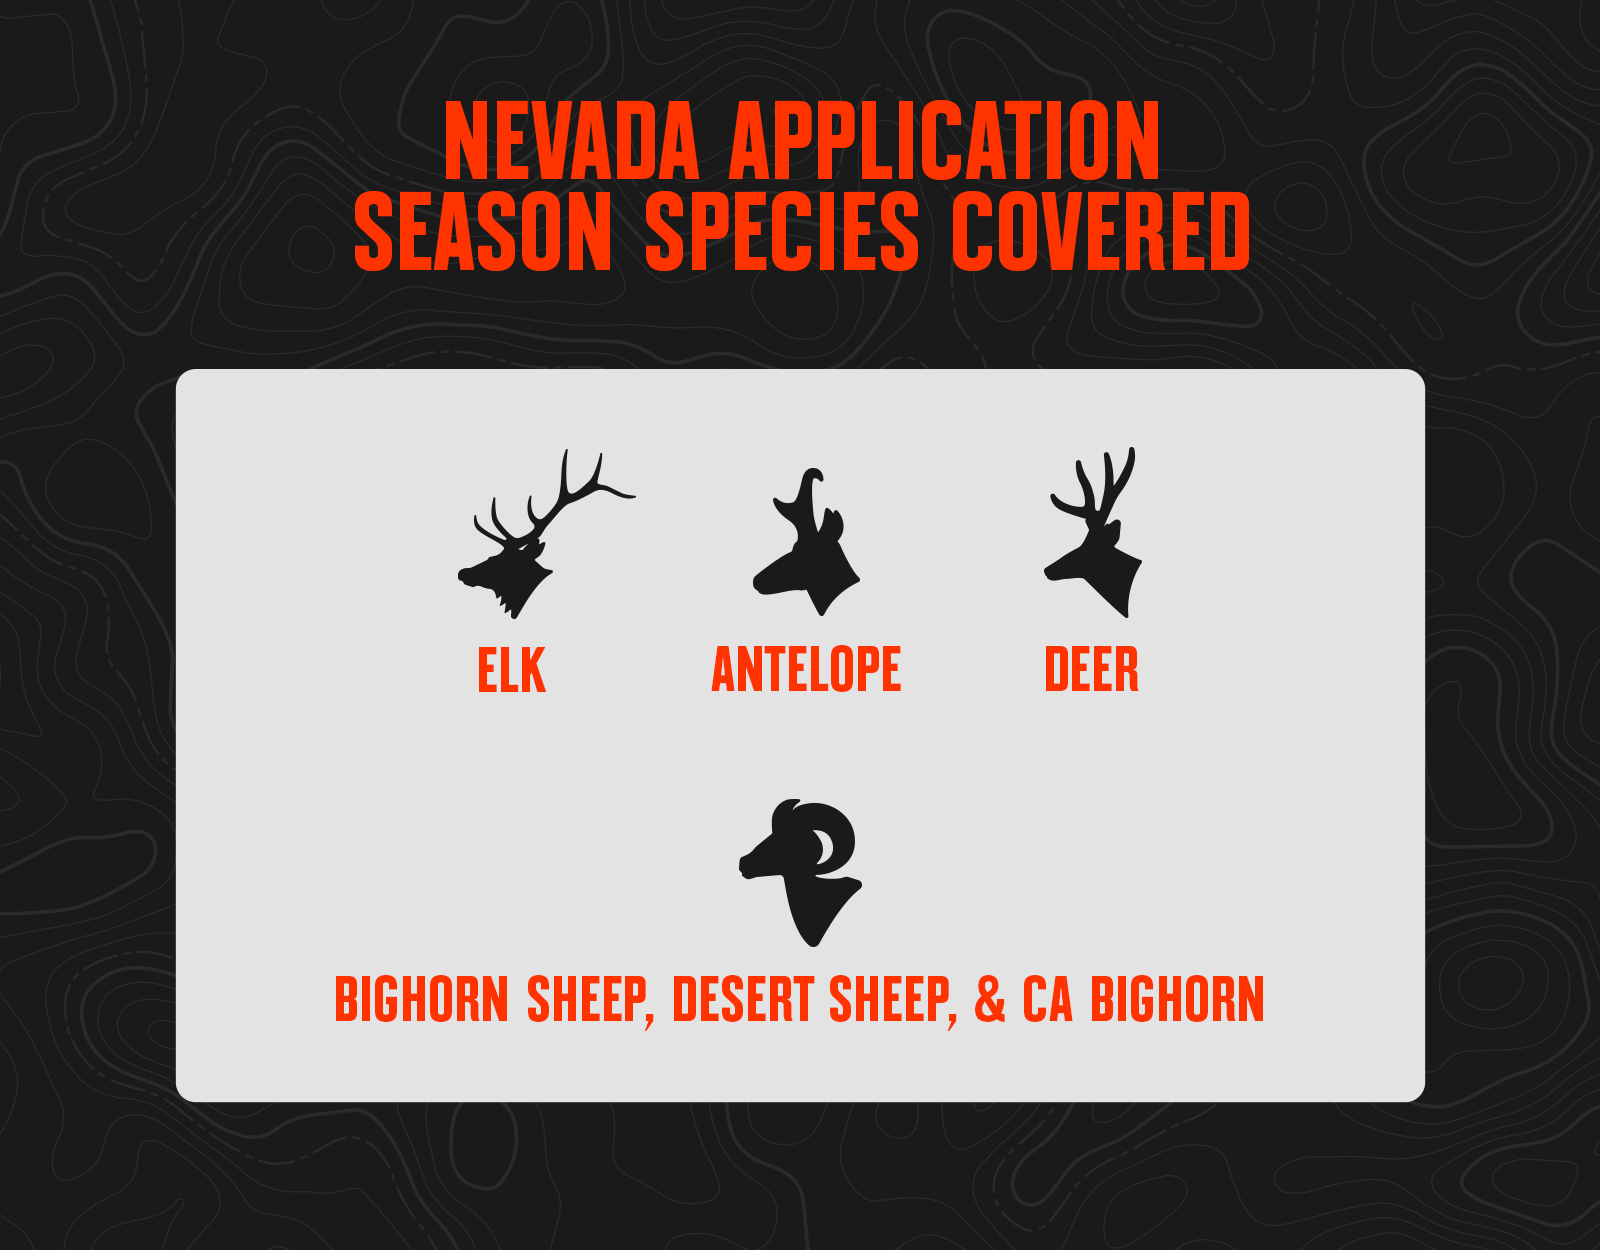 Nevada hunting application season species.